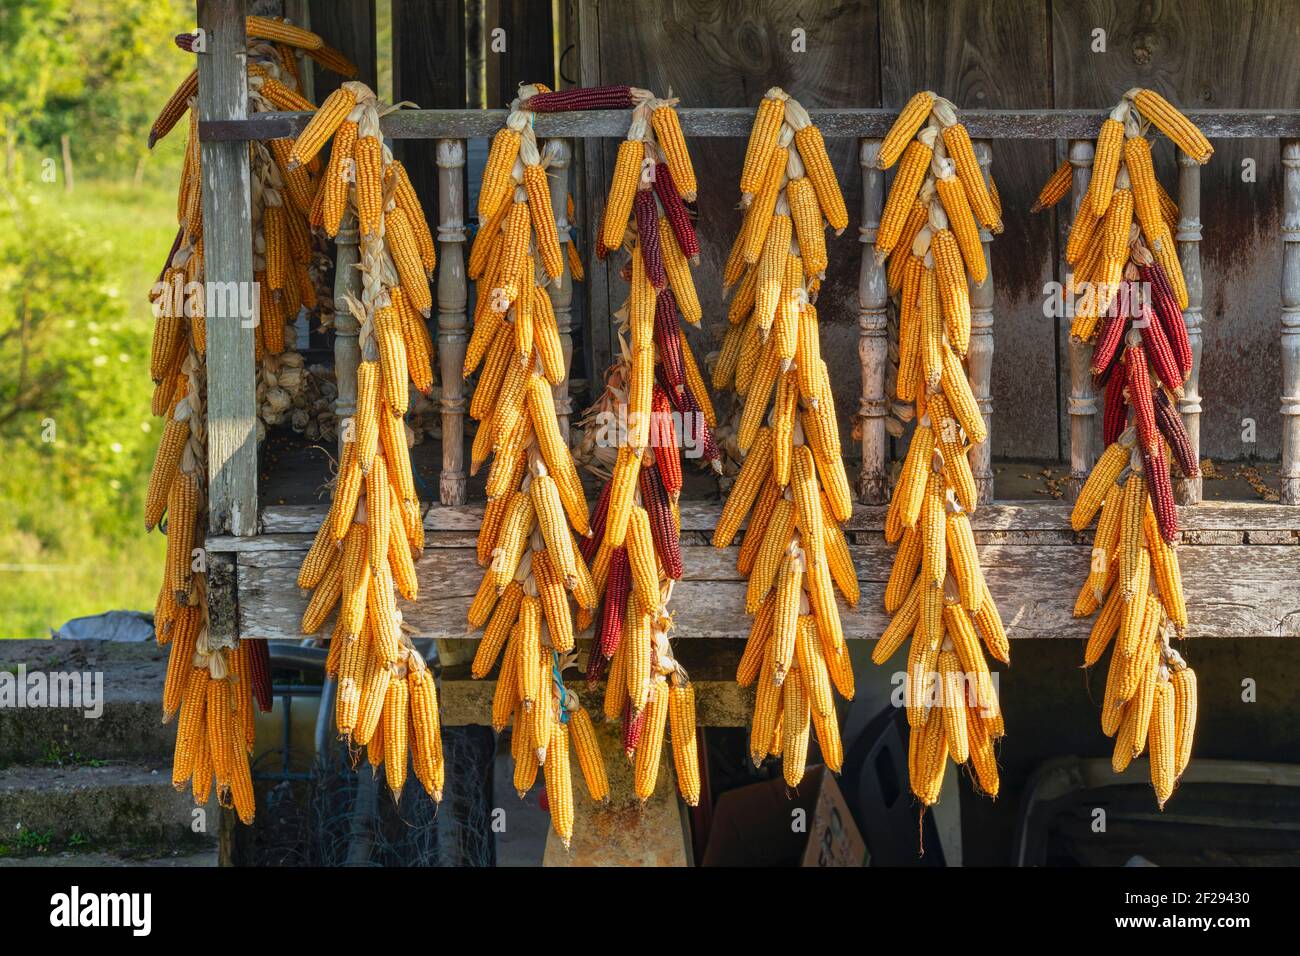 Strings of corn cobs hanging to dry, Asturias, Spain Stock Photo